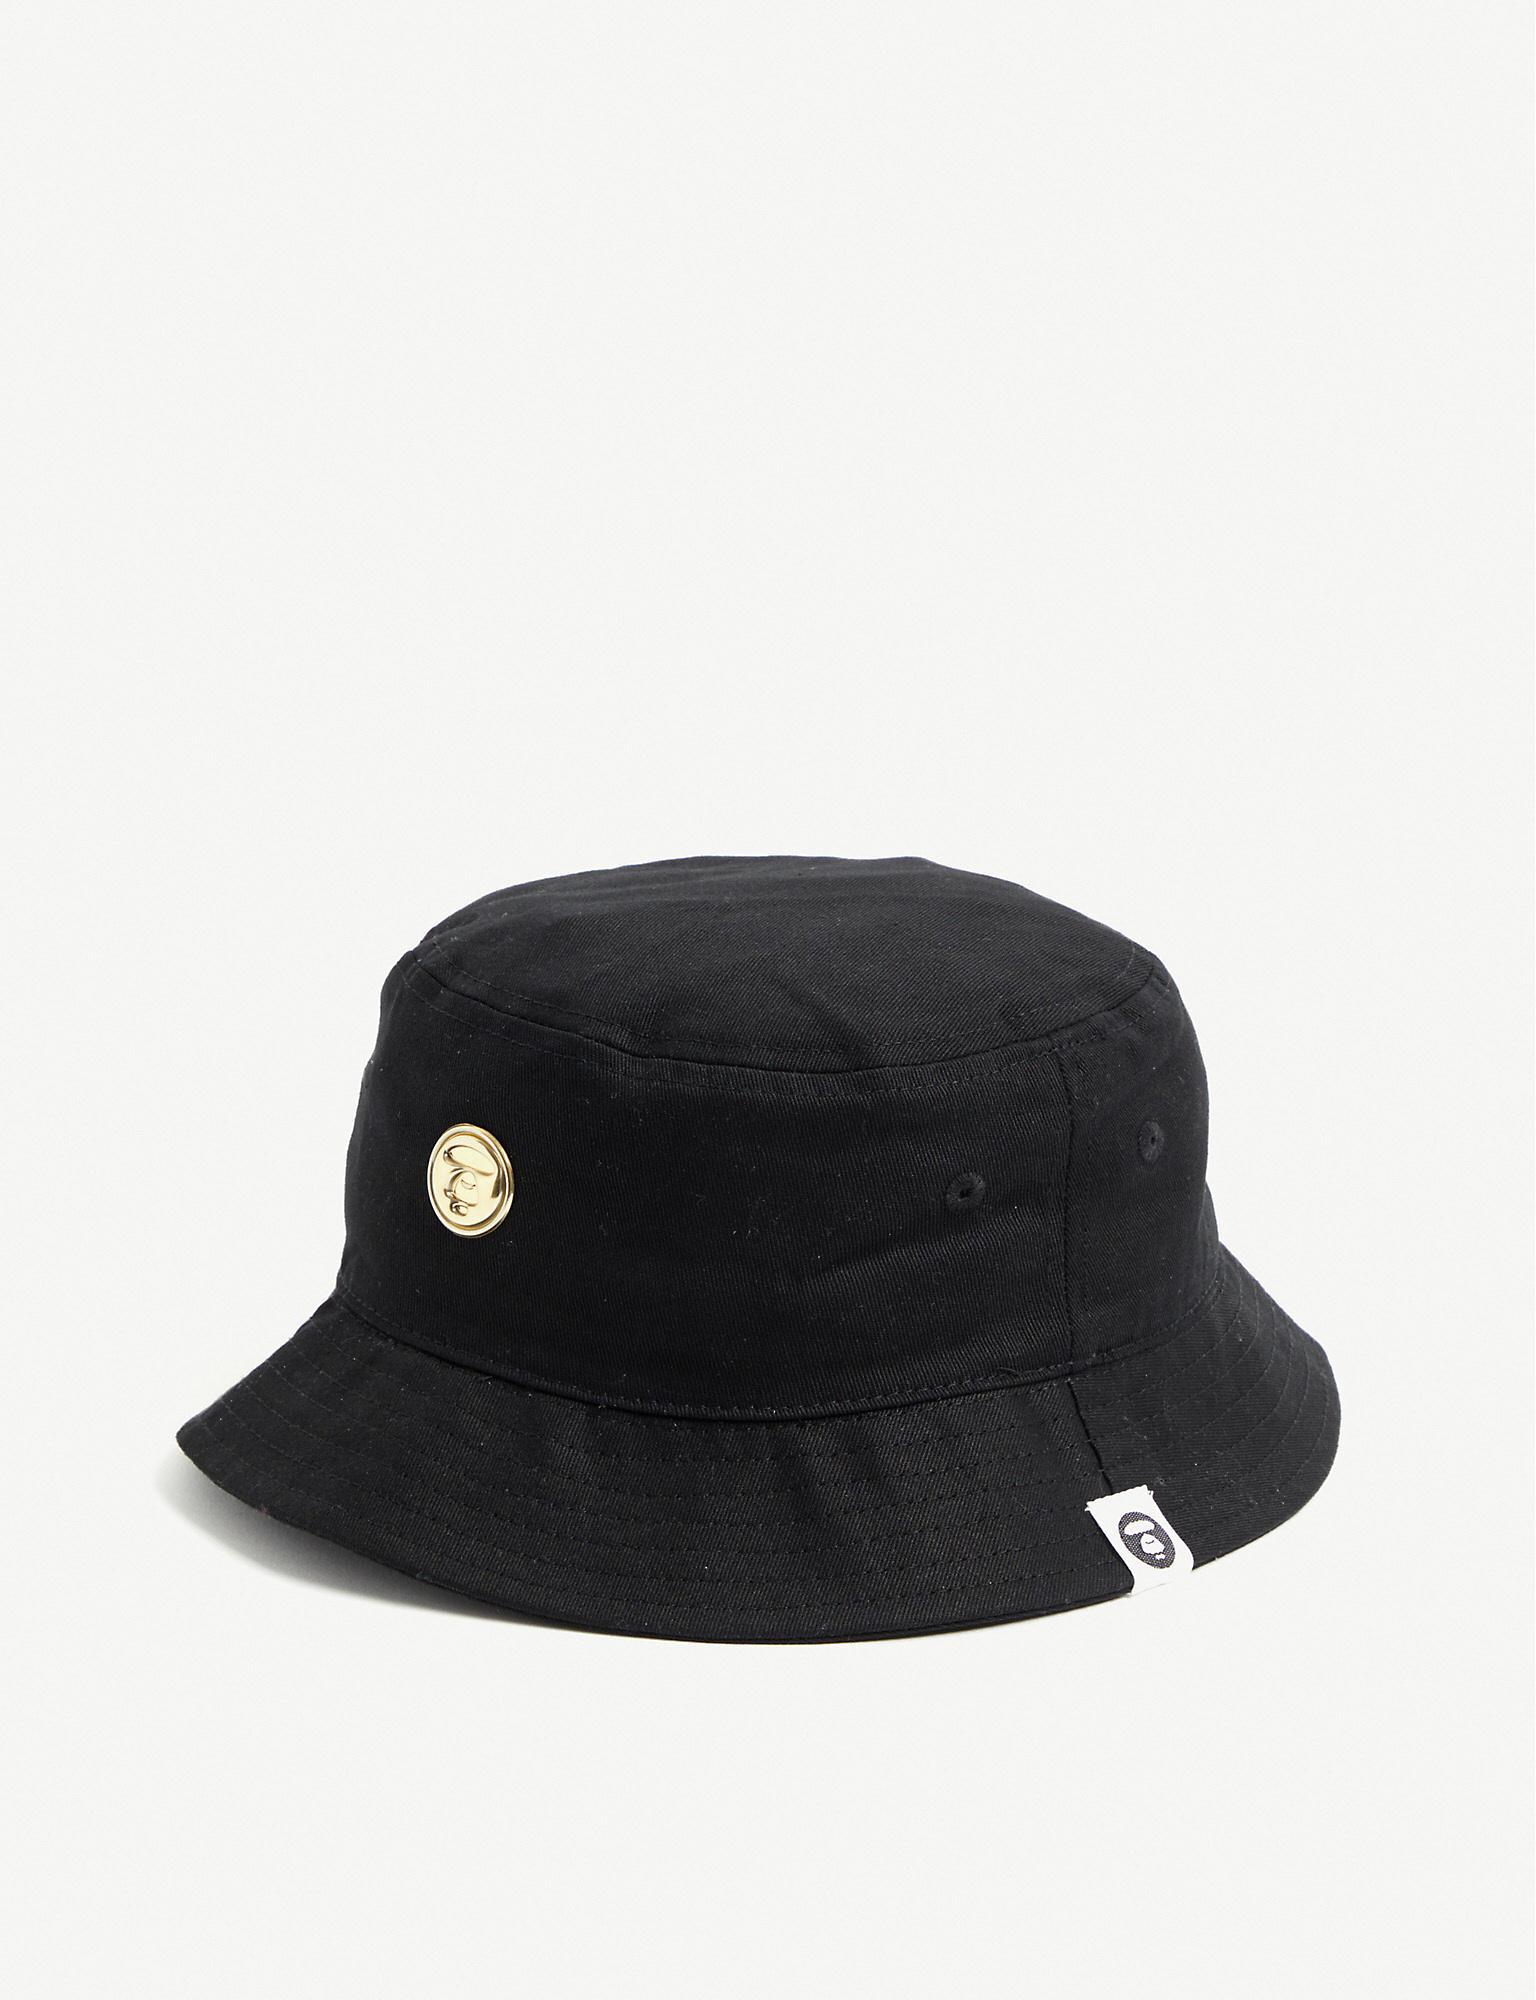 Aape Branded Cotton Canvas Bucket Hat in Black for Men - Lyst